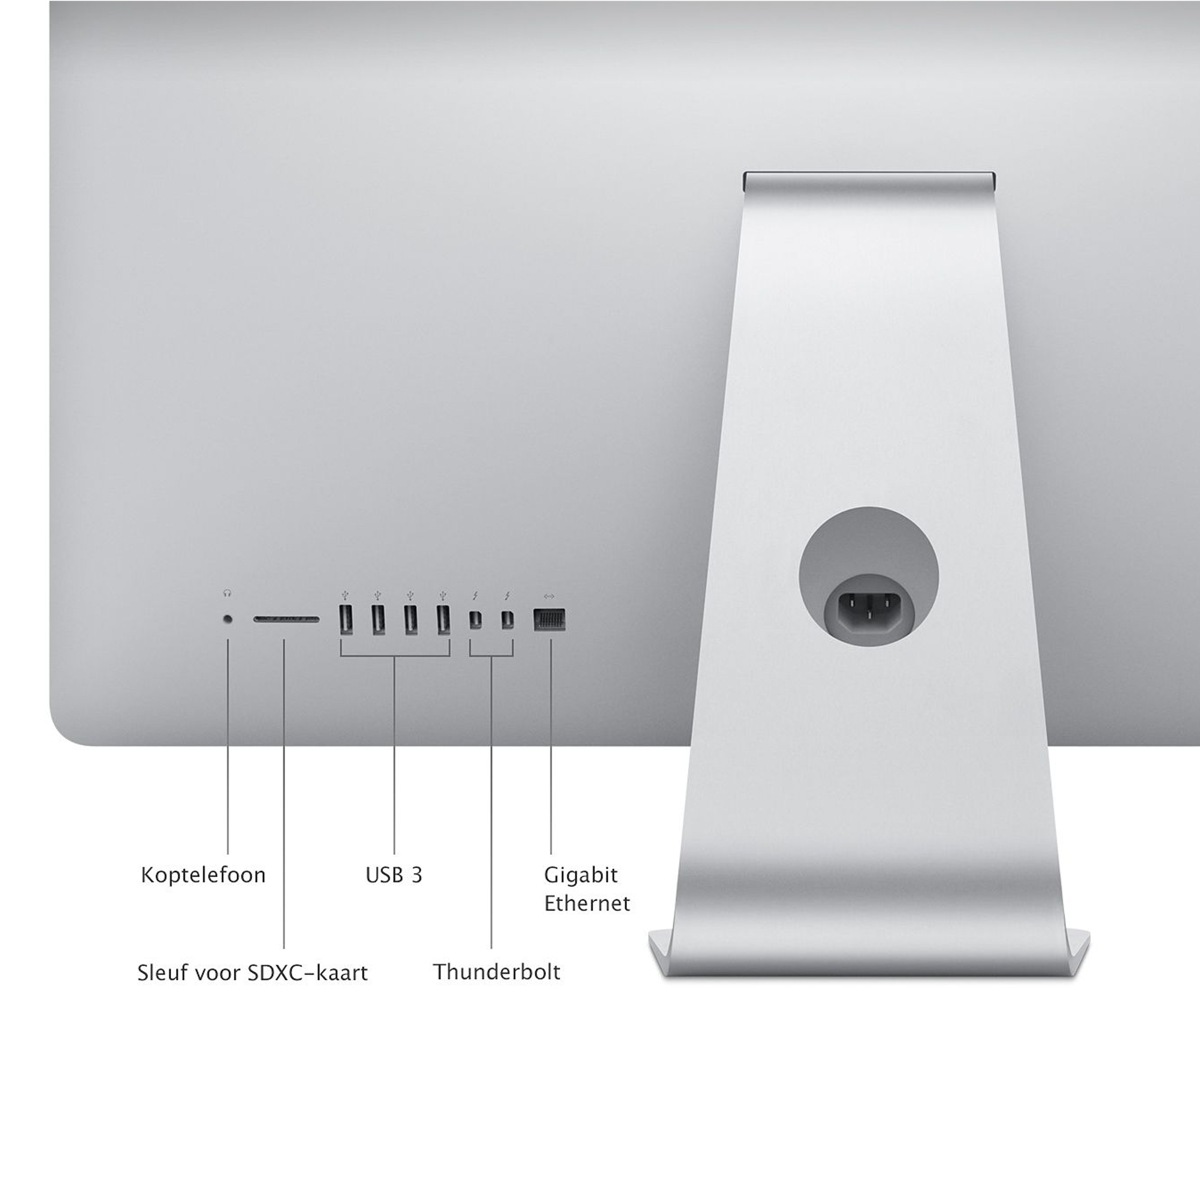 Refurbished iMac 21.5" i5 3.0 8GB 1TB Fusion 2019 - test-product-media-liquid1